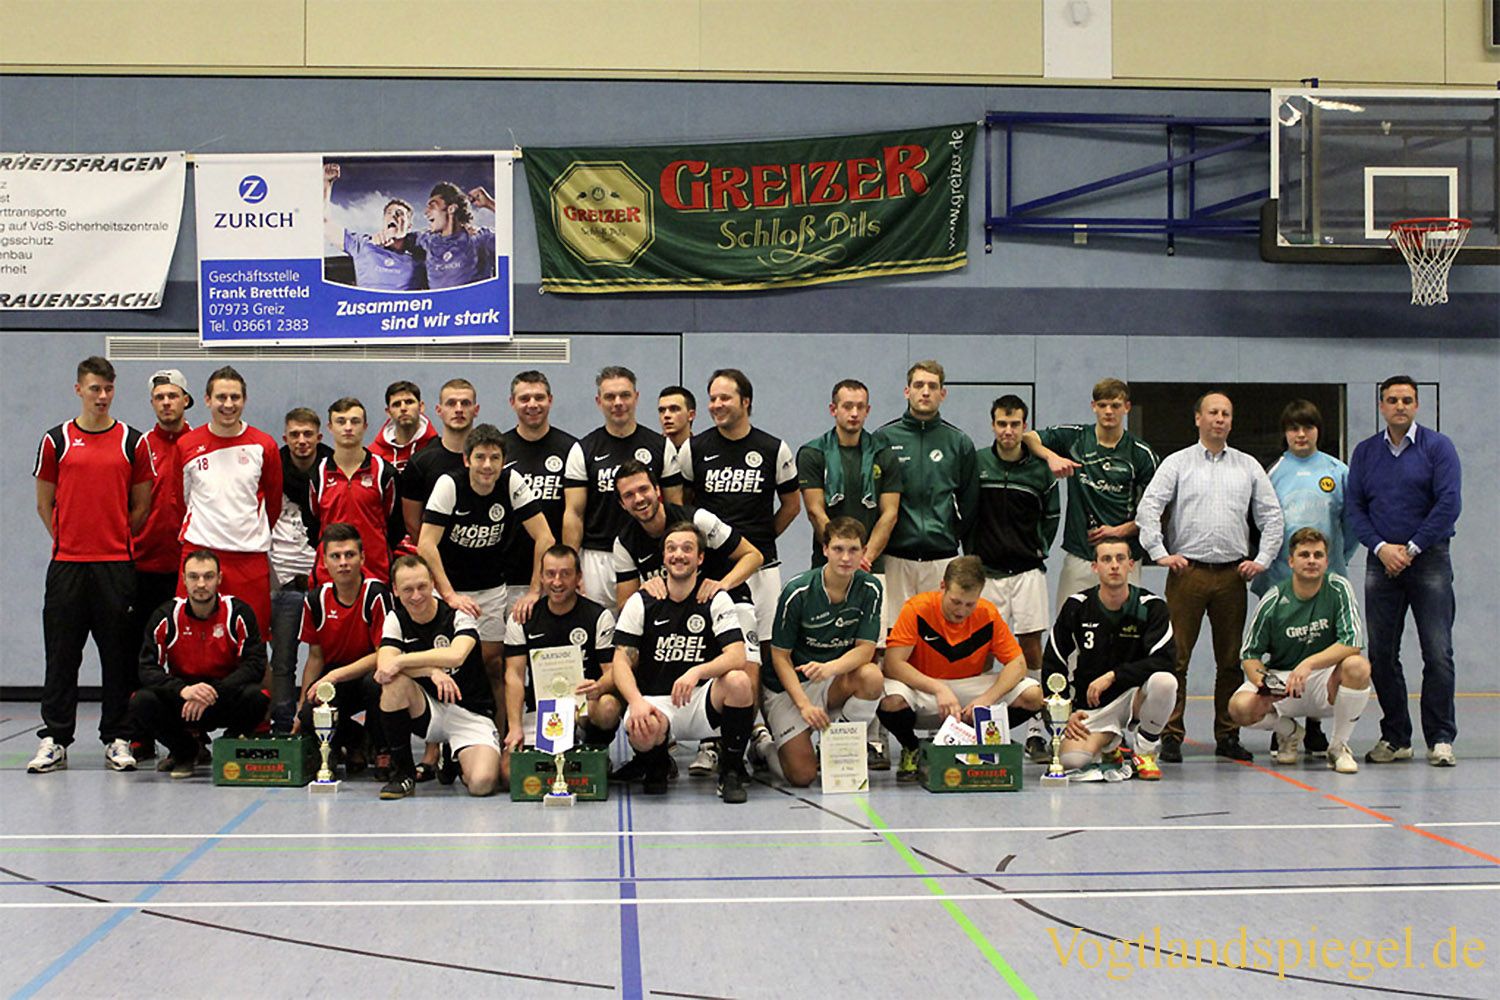 Schloß-Pils-Pokal der Vereinsbrauerei Greiz 2014